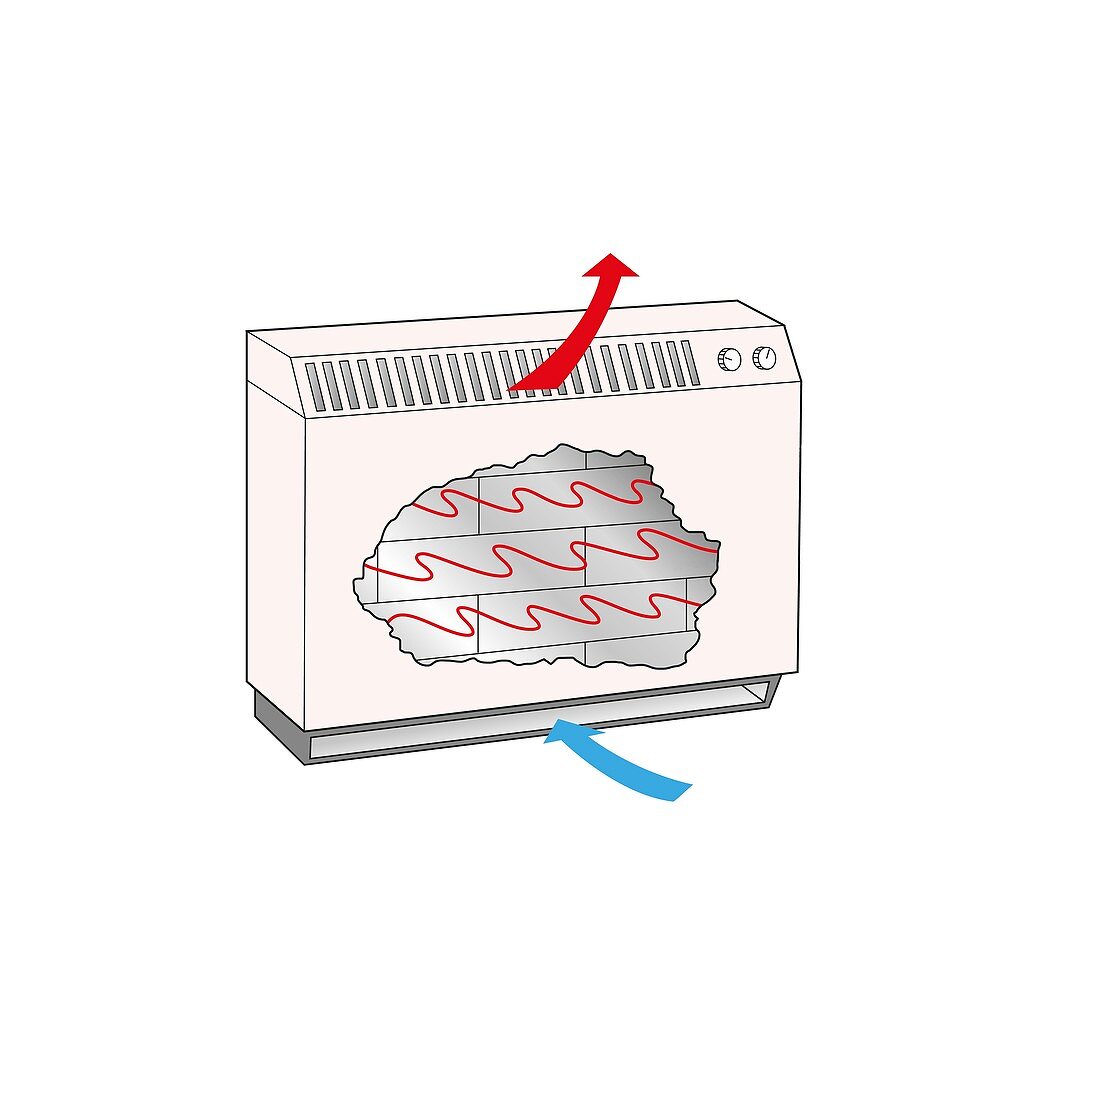 Storage heater, cutaway illustration